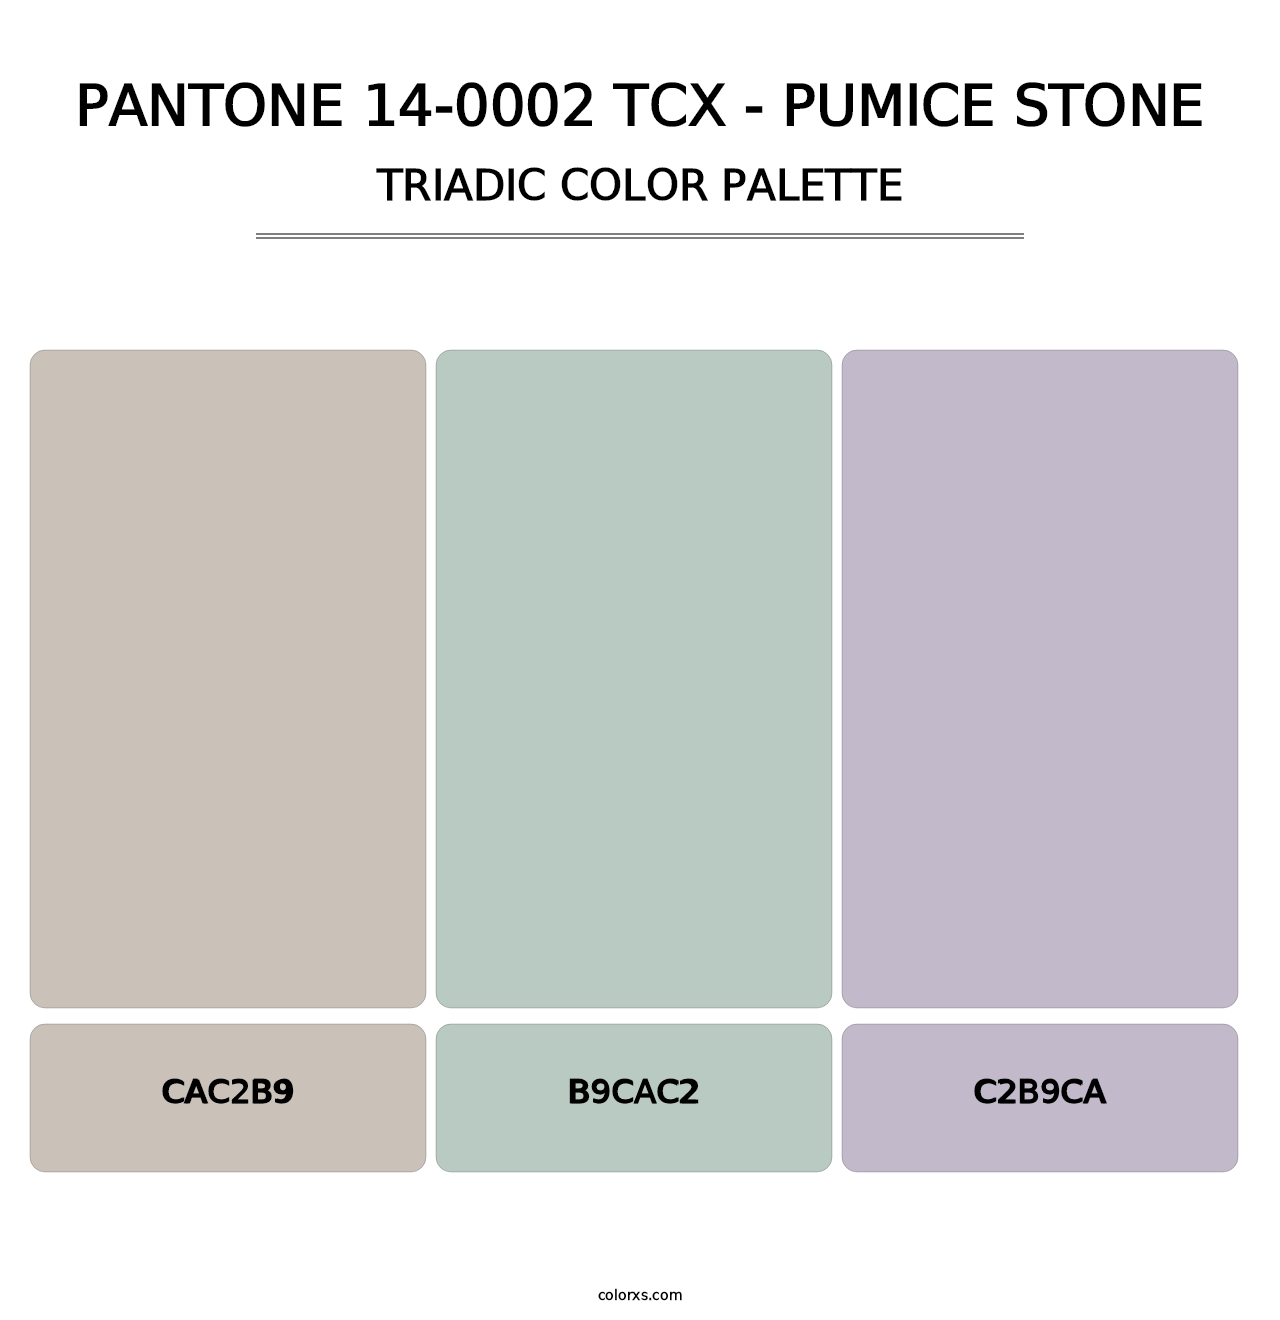 PANTONE 14-0002 TCX - Pumice Stone - Triadic Color Palette